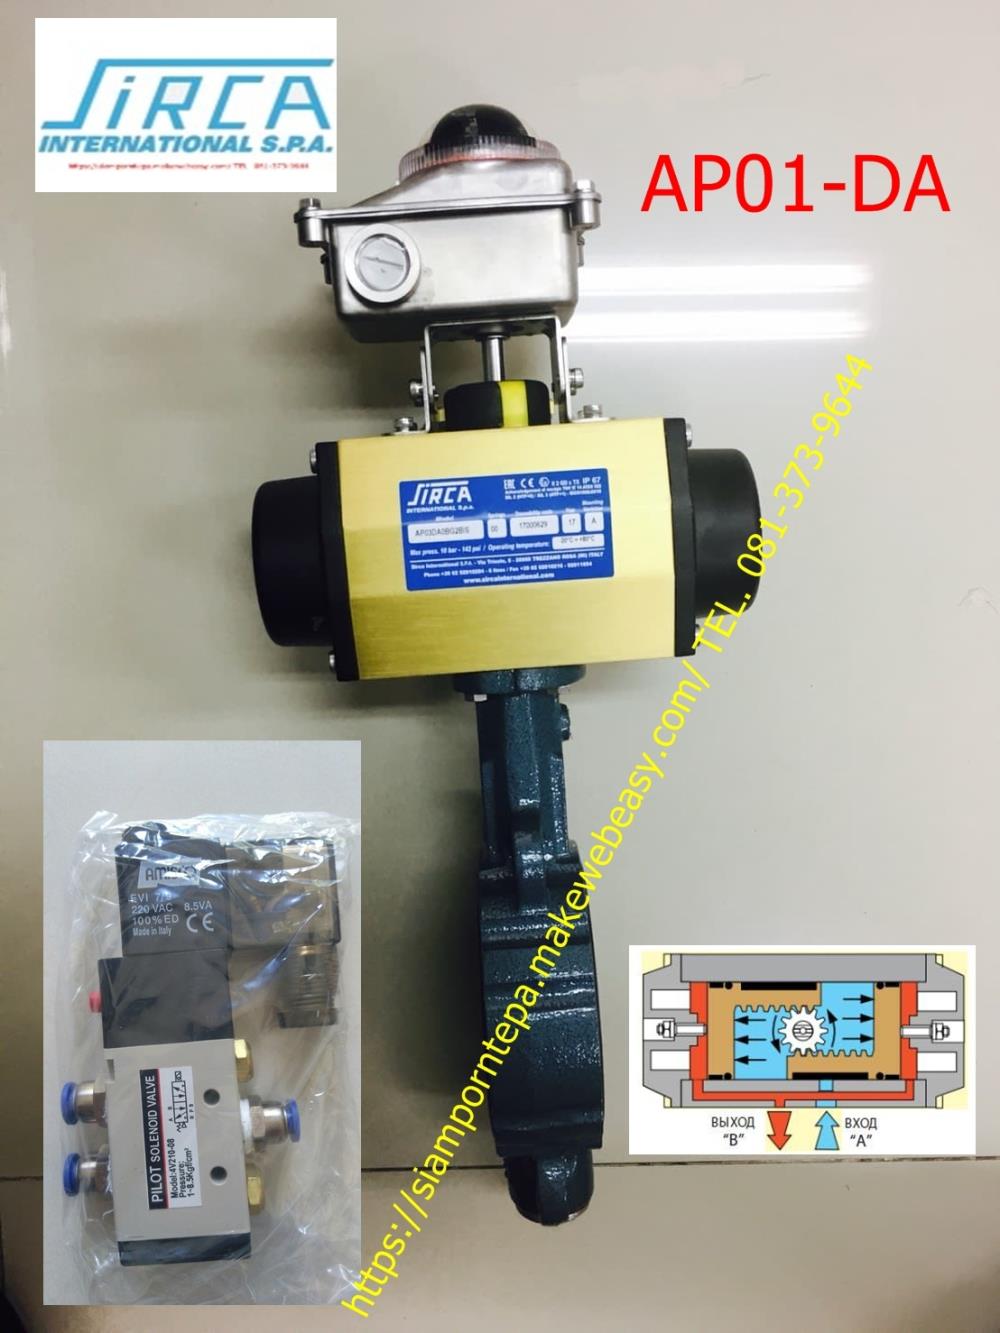 AP01-DA "Sirca" actuator Double Acting หัวขับลม AP1 ทนทาน ส่งฟรีทั่วประเทศ ,Sirca Actuator หัวขับคุณภาพสูง จาก Italy ใช้เปิด ปิด อุปกรณ์ น้ำ น้ำมัน แก๊ส ซึ่ง ทนความร้อน ทำงานร่วมกับ Ball valve Butterfly Valve หรือจะเป็น Glove valve ,AP01-DA "Sirca",Machinery and Process Equipment/Actuators